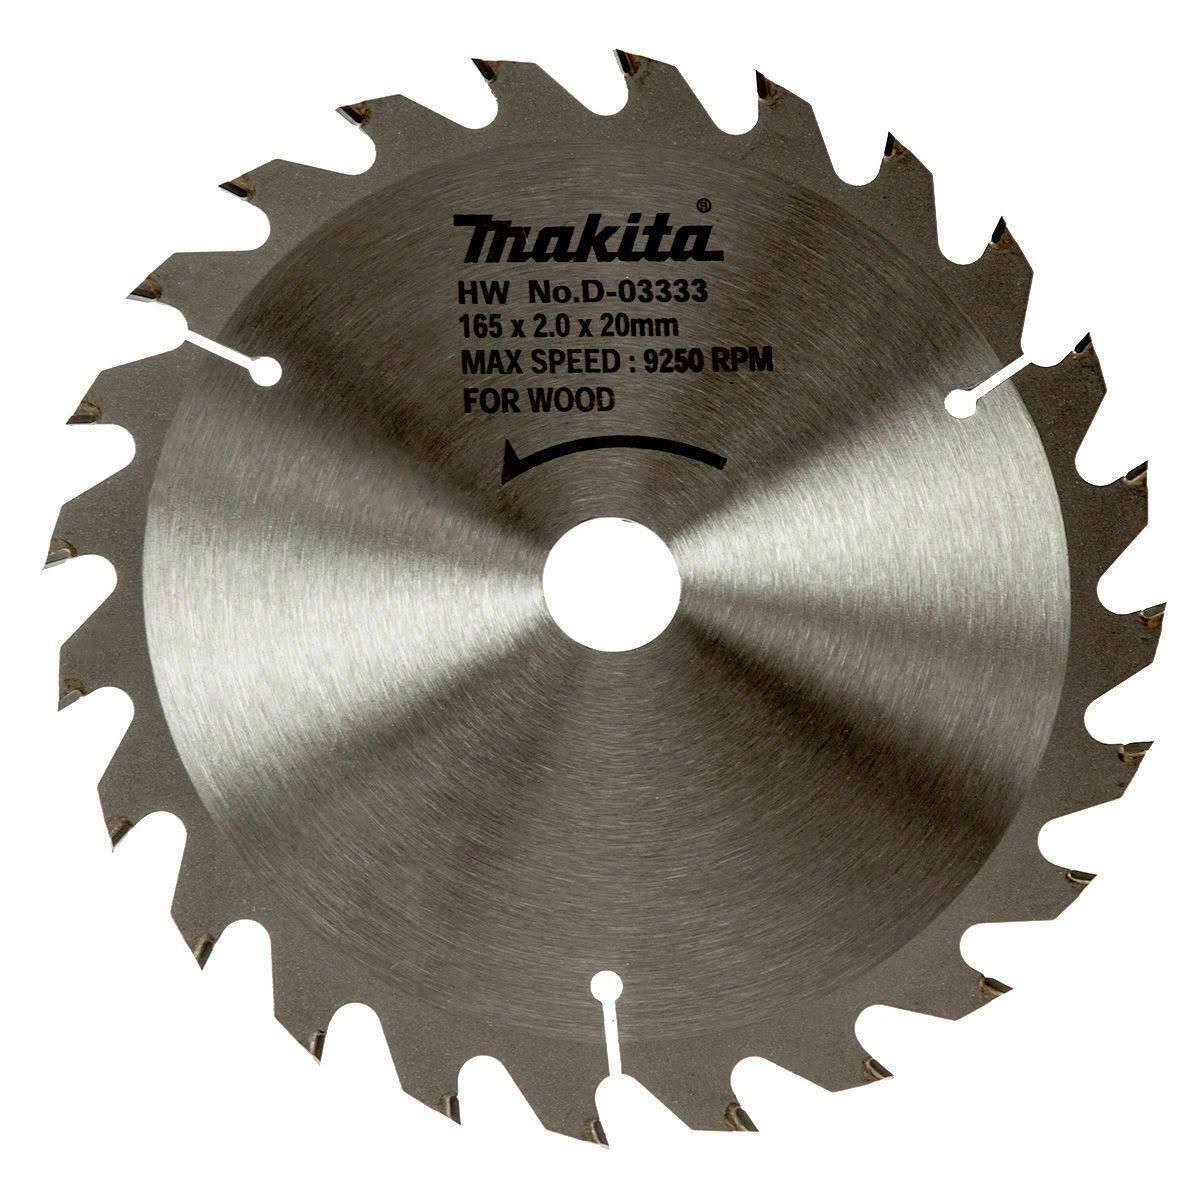 NEW Makita D-03349 165x20mm 40T Circular Saw Blade D-03349 